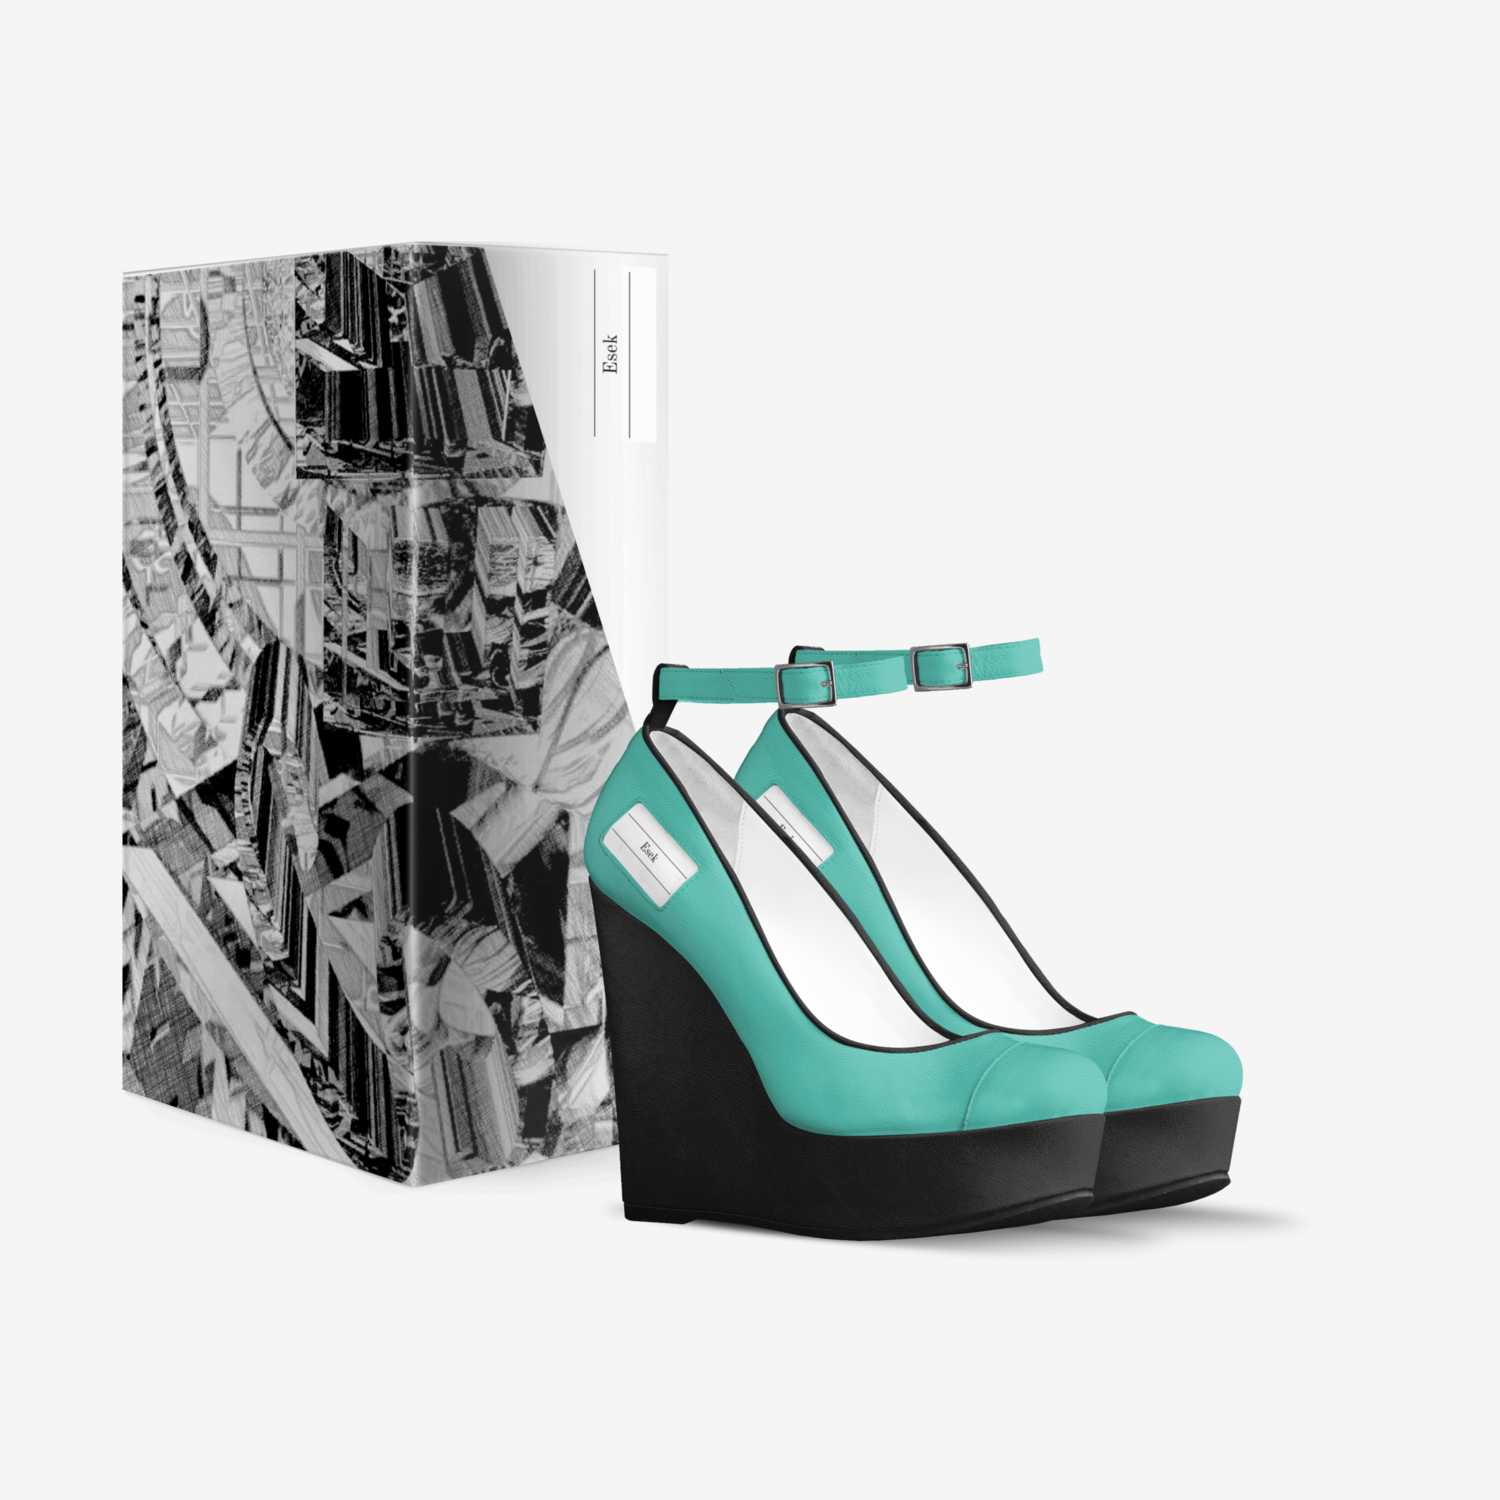 Esek custom made in Italy shoes by Wayne Reed | Box view